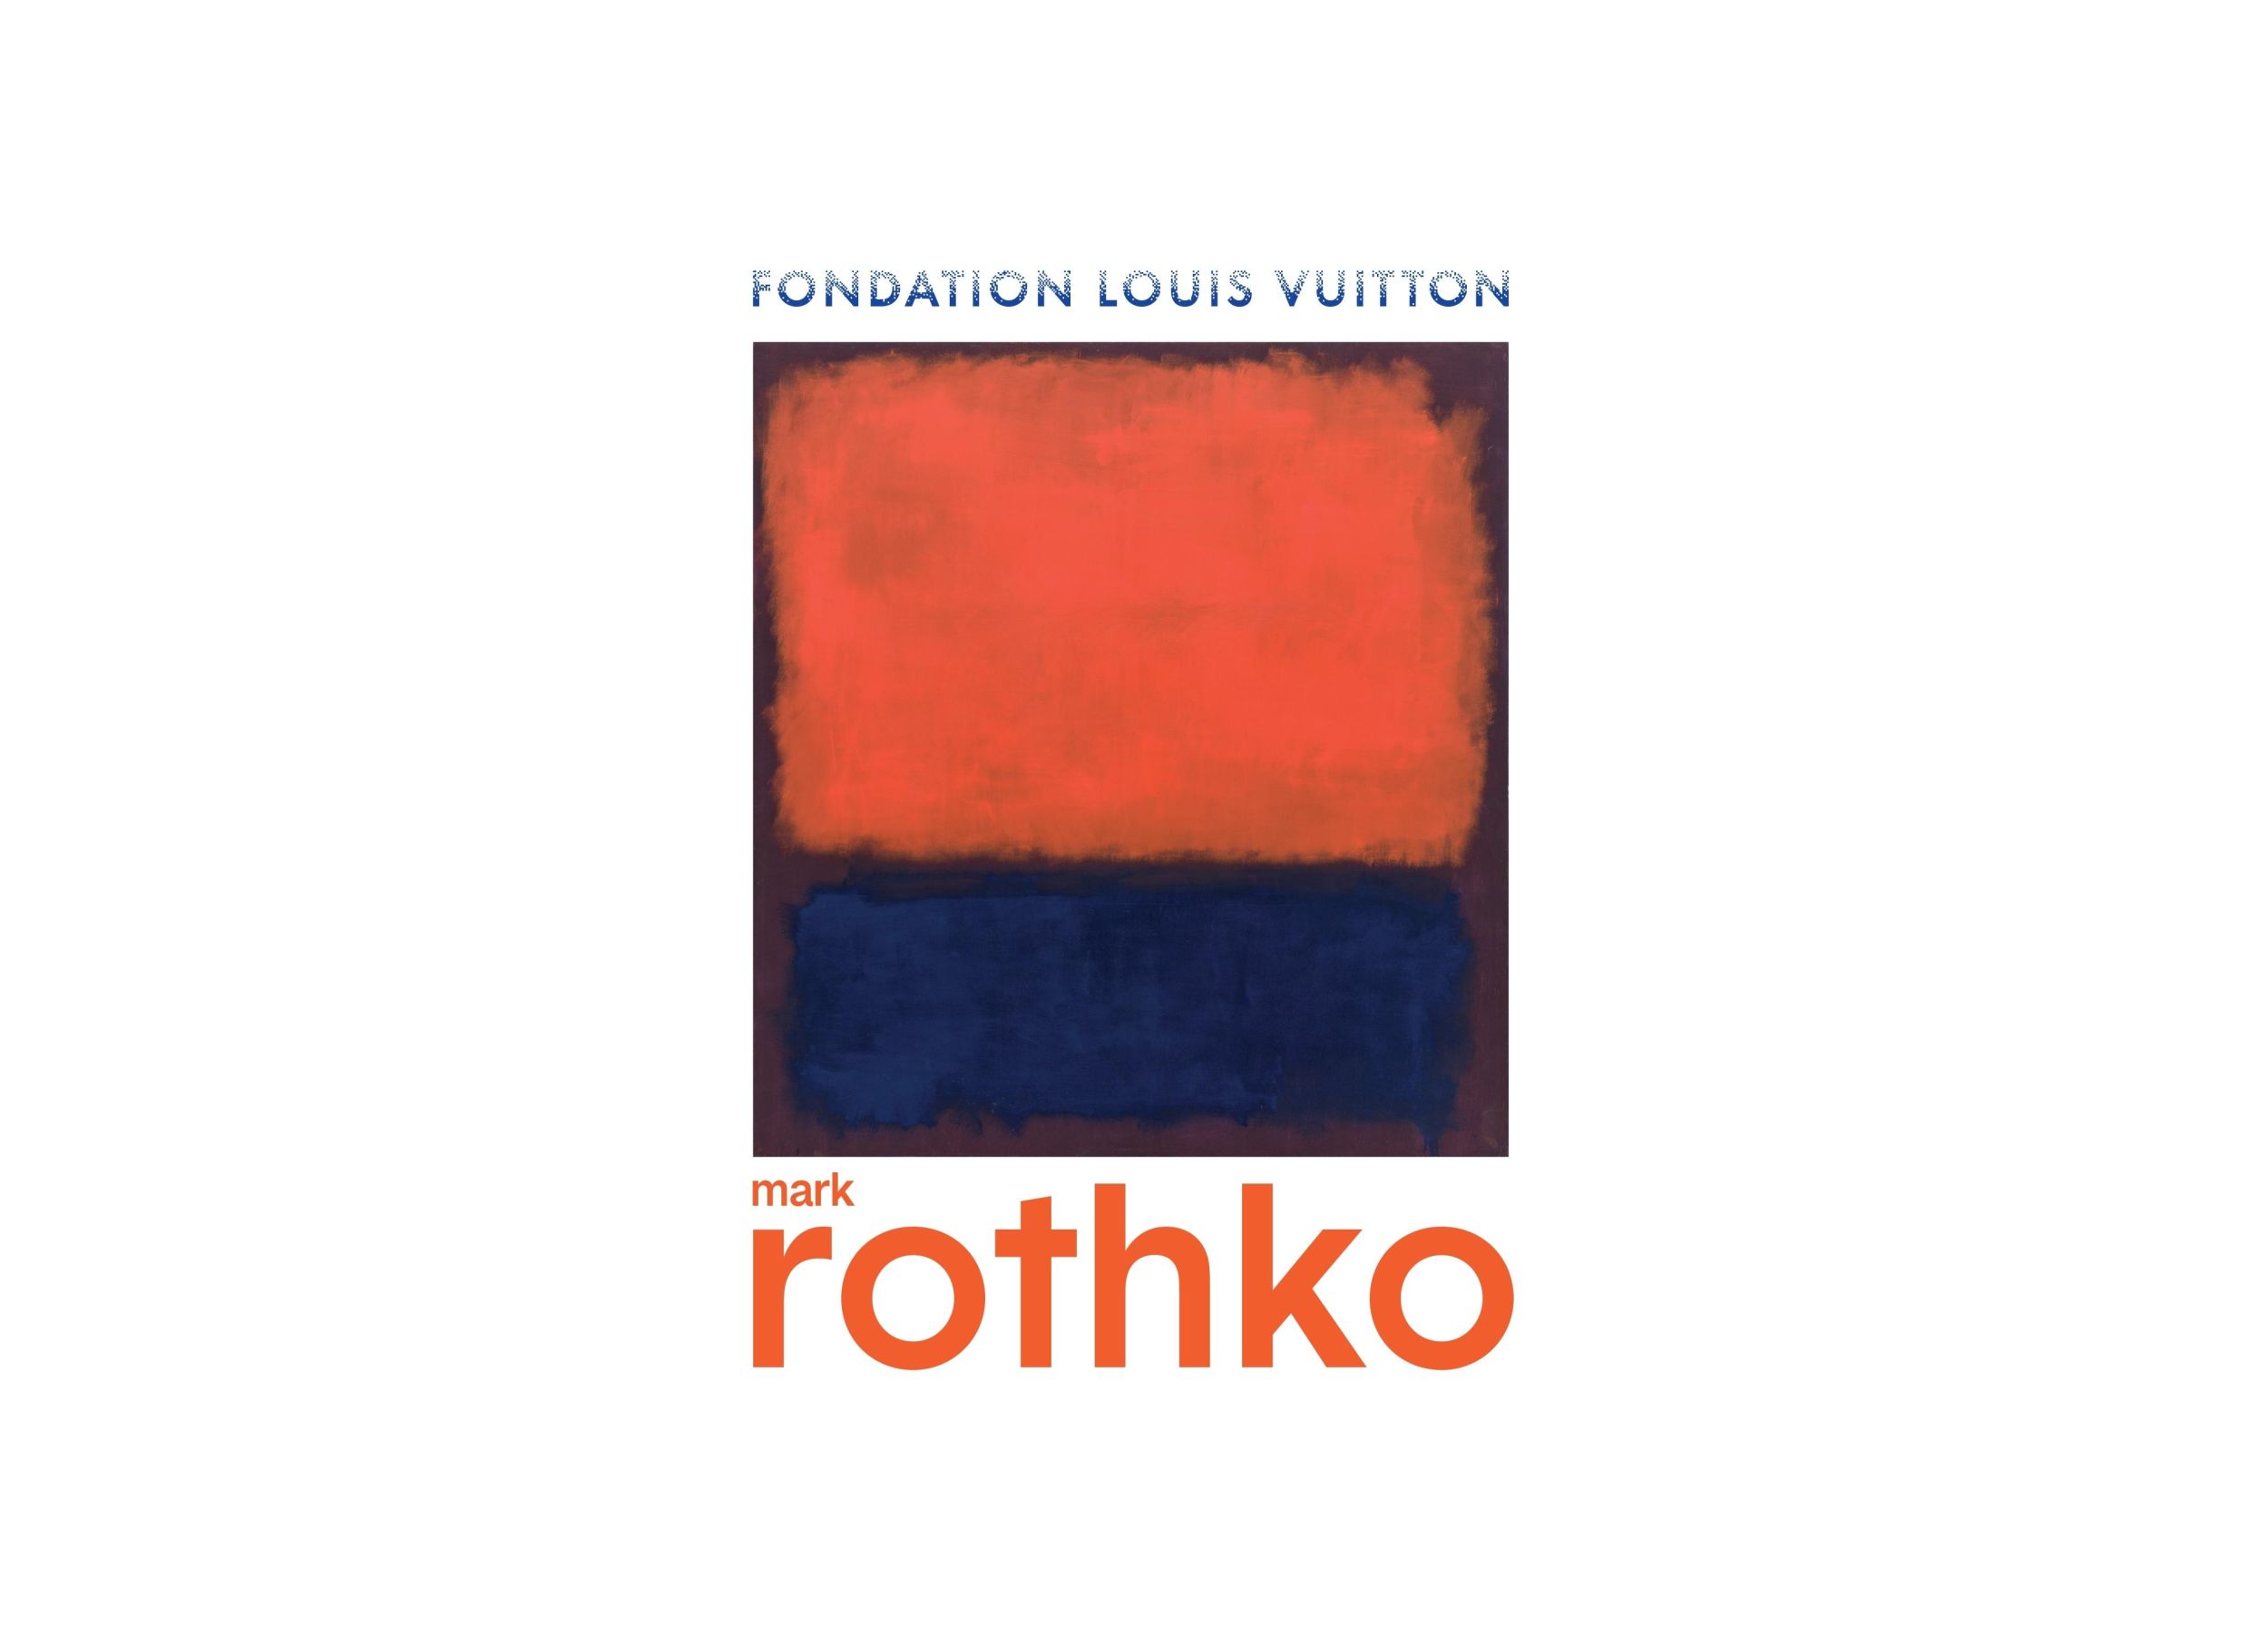 Fondation Louis Vuitton in Paris Presents the Mark Rothko Exhibition